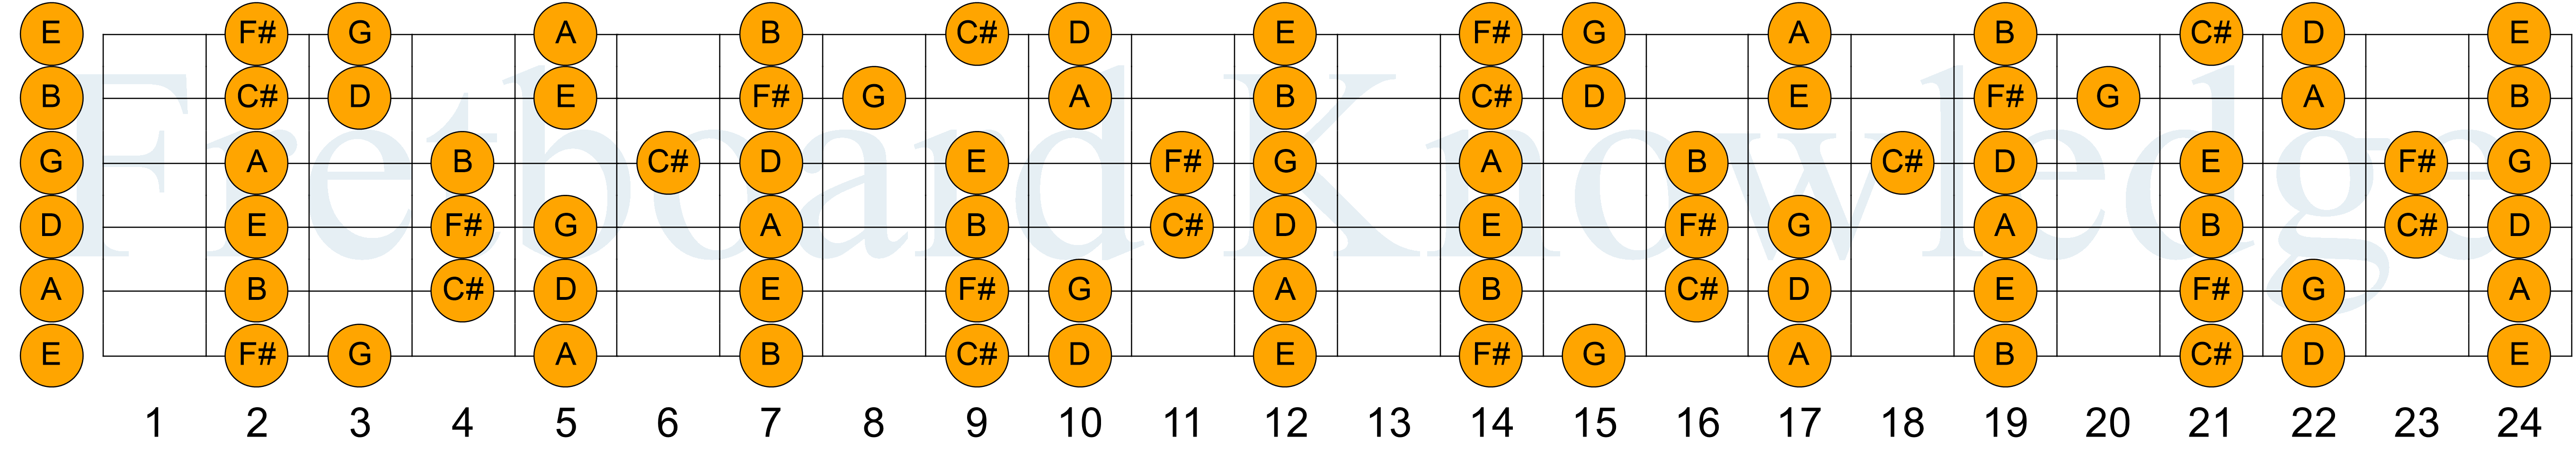 D Major Scale Guitar Fretboard Diagram